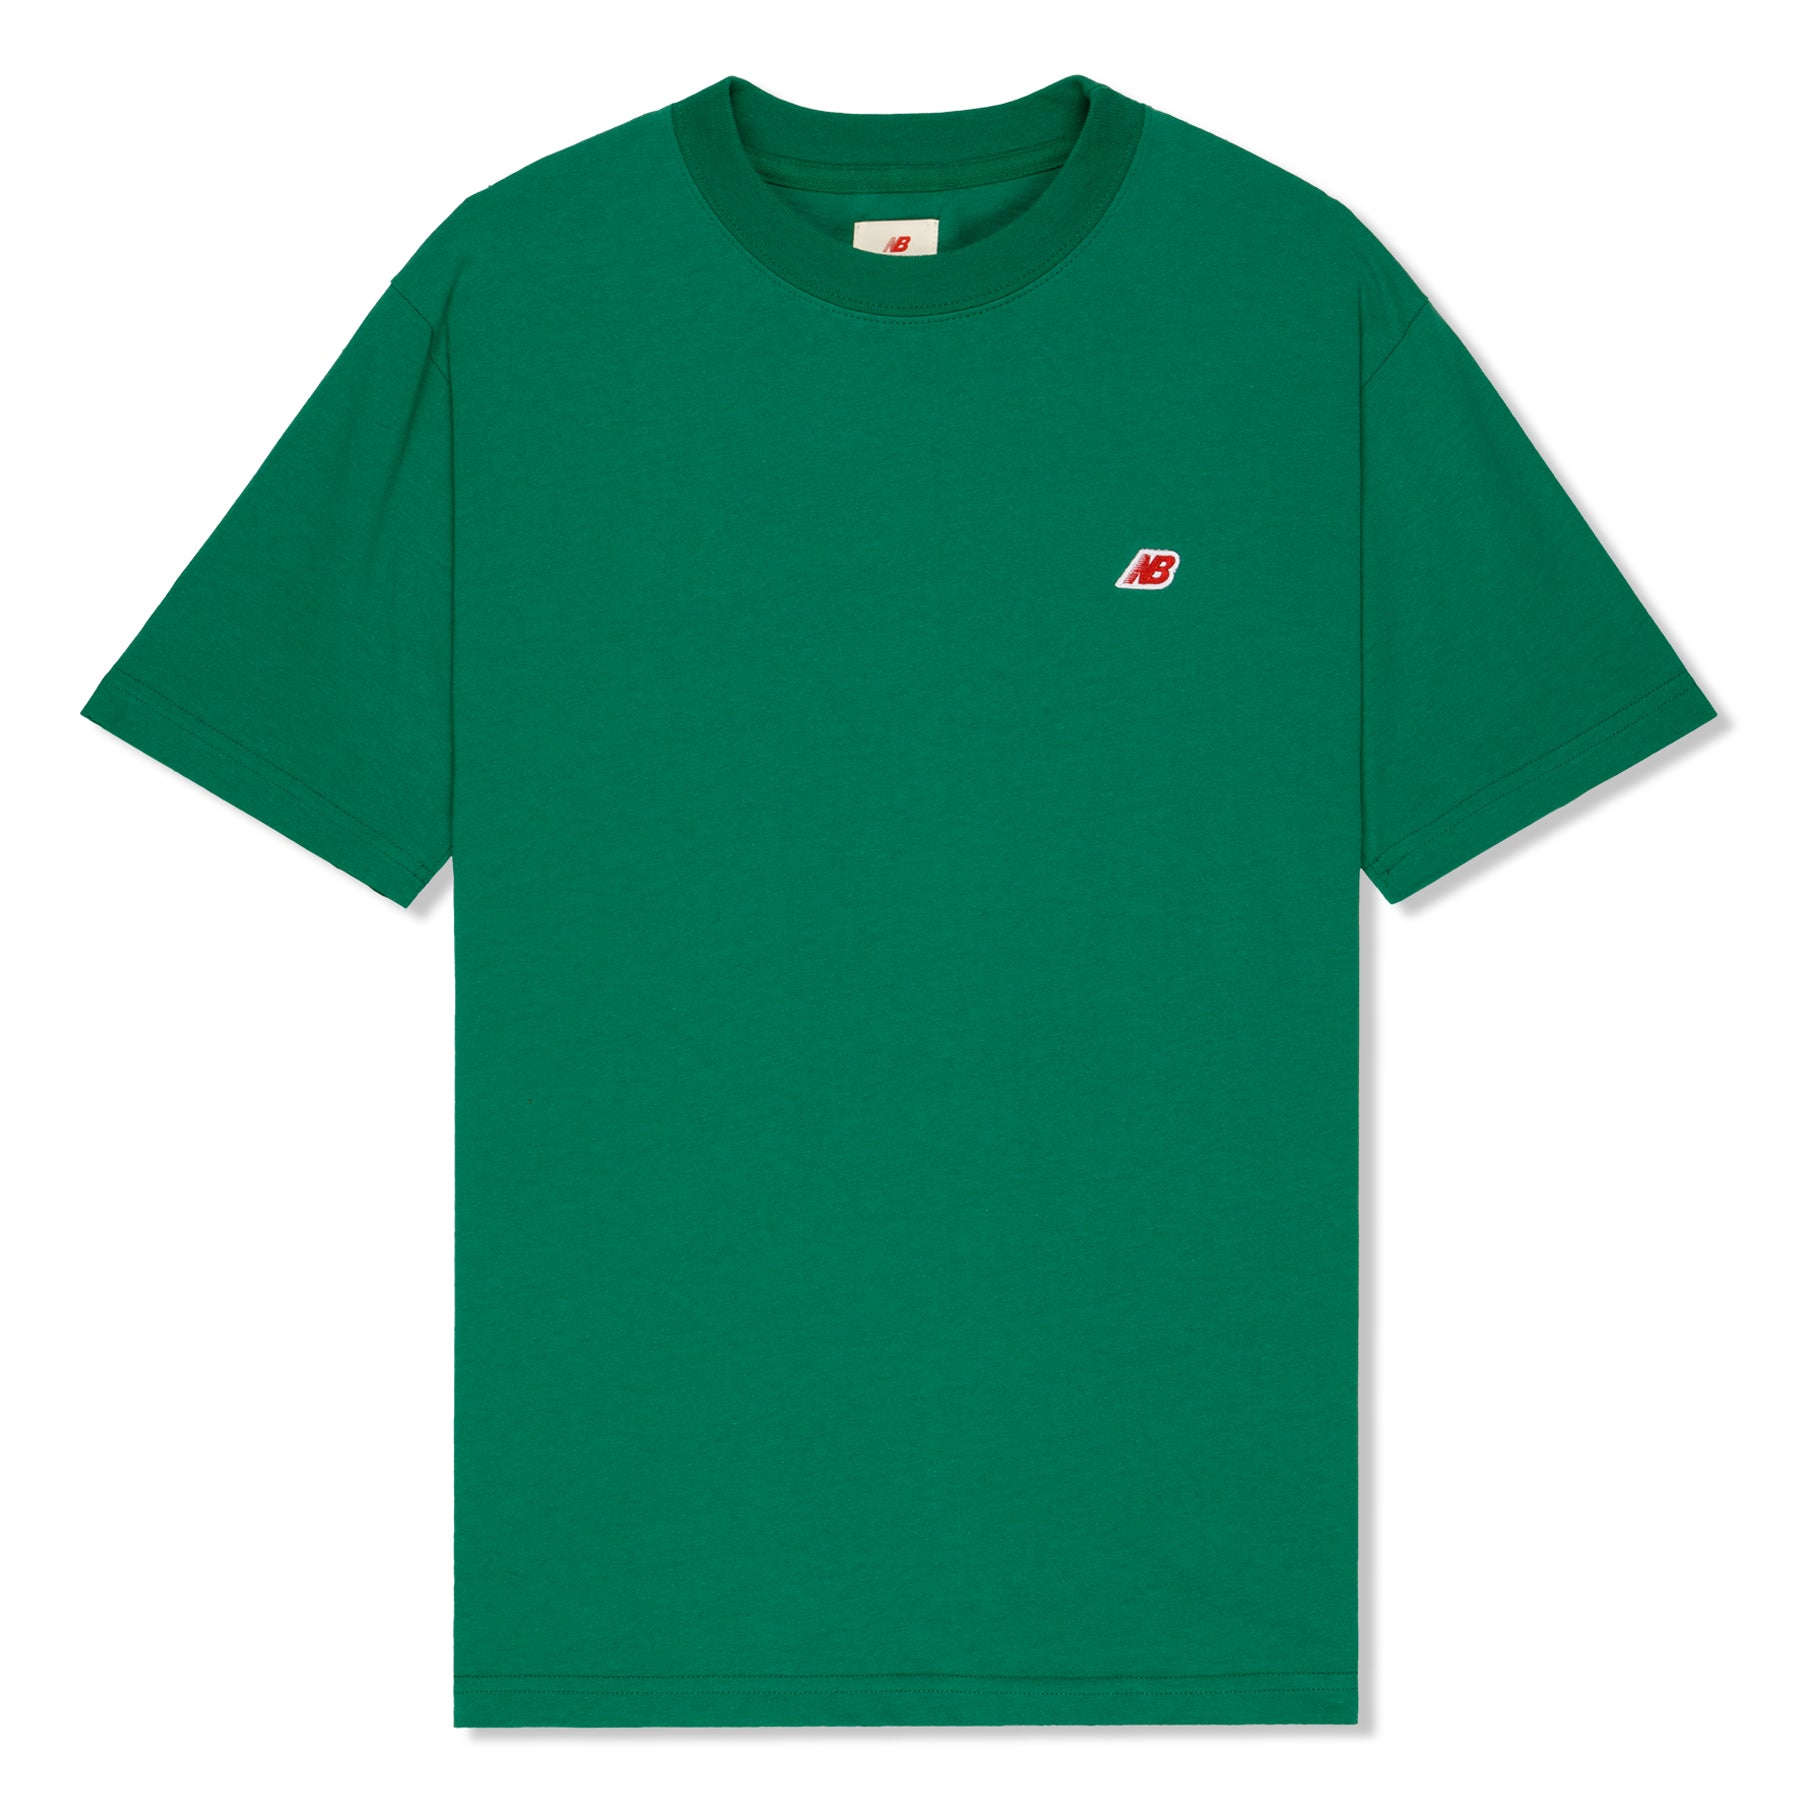 MADE in USA Core T-Shirt - New Balance